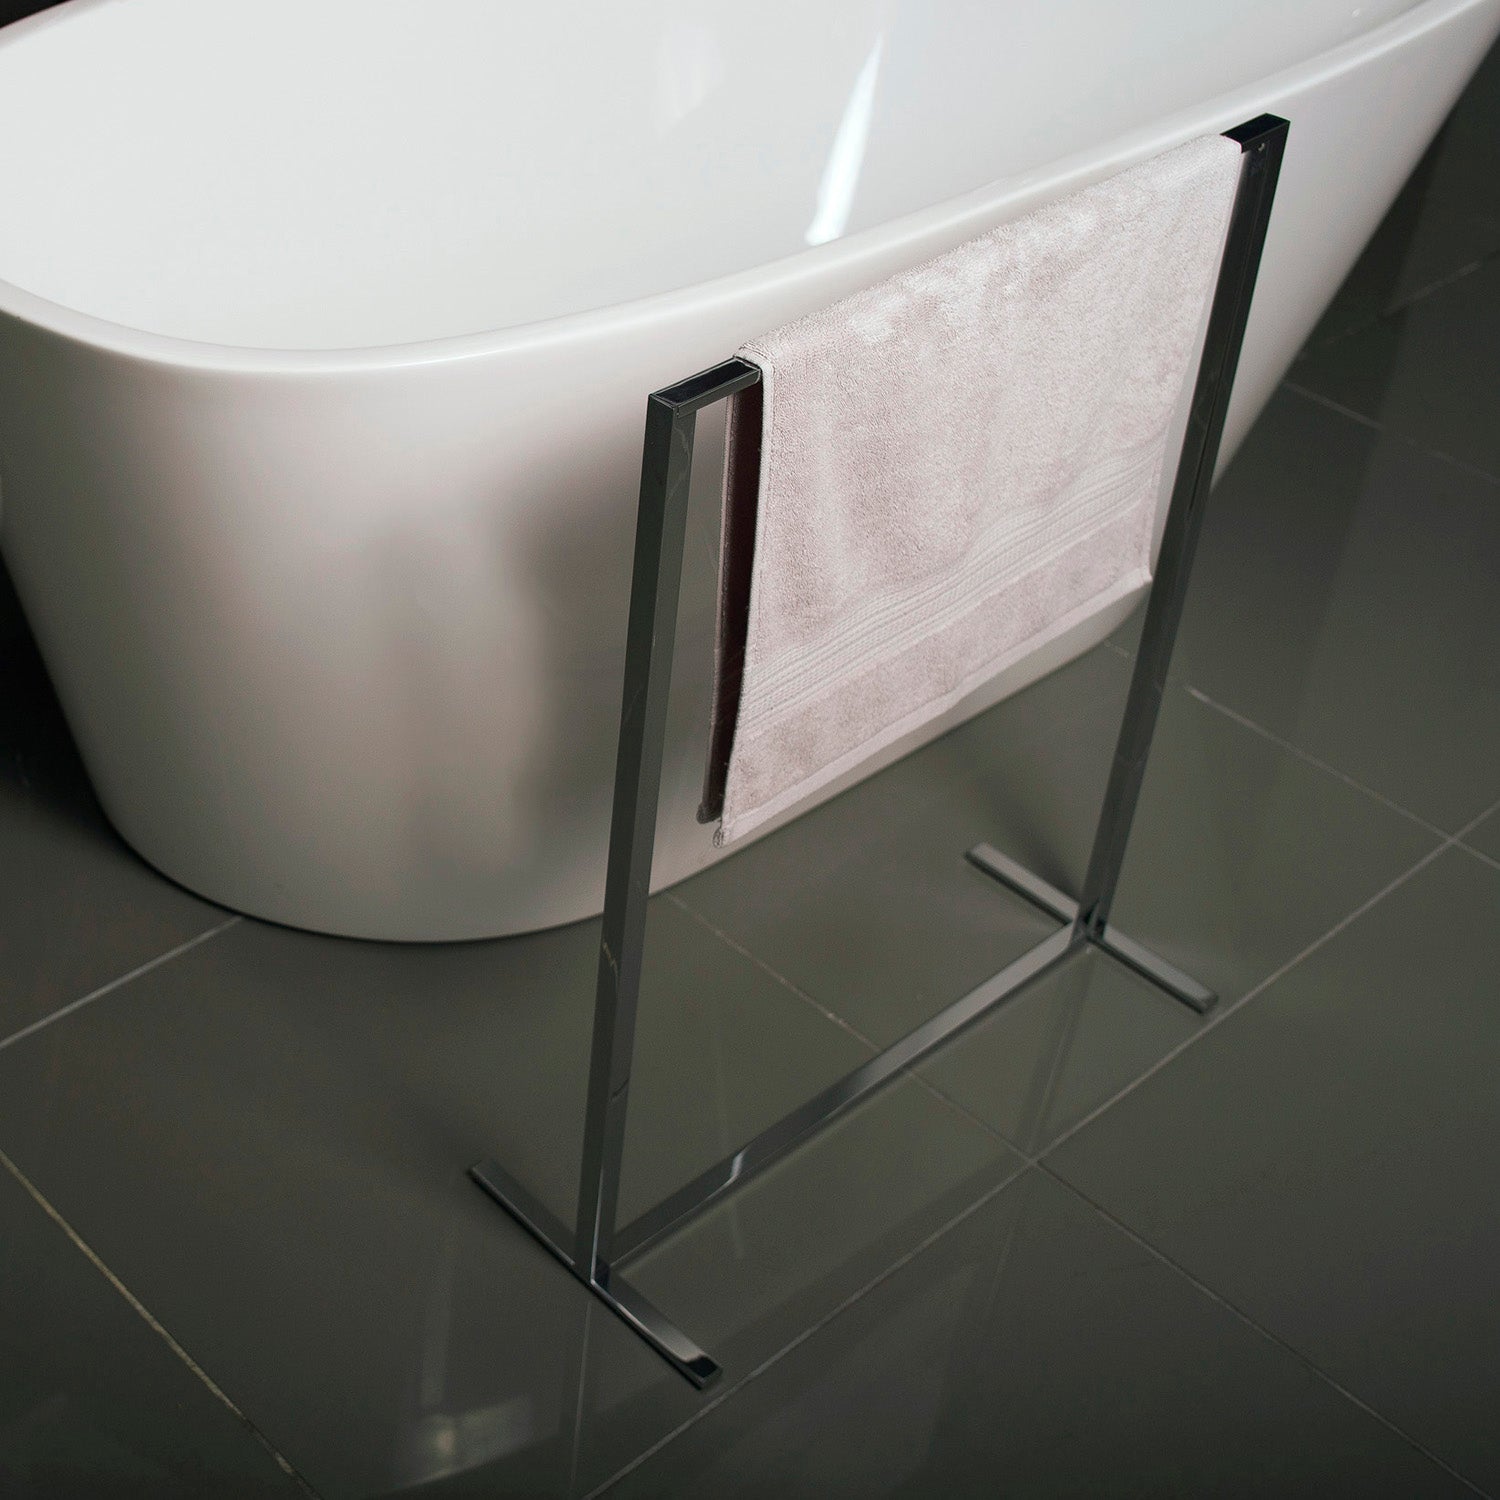 COSMIC Bathlife Standing Towel Rack, Brass Body, Chrome Finish, 23-5/8 x 28-1/2 x 9-13/16 Inches (2290166)